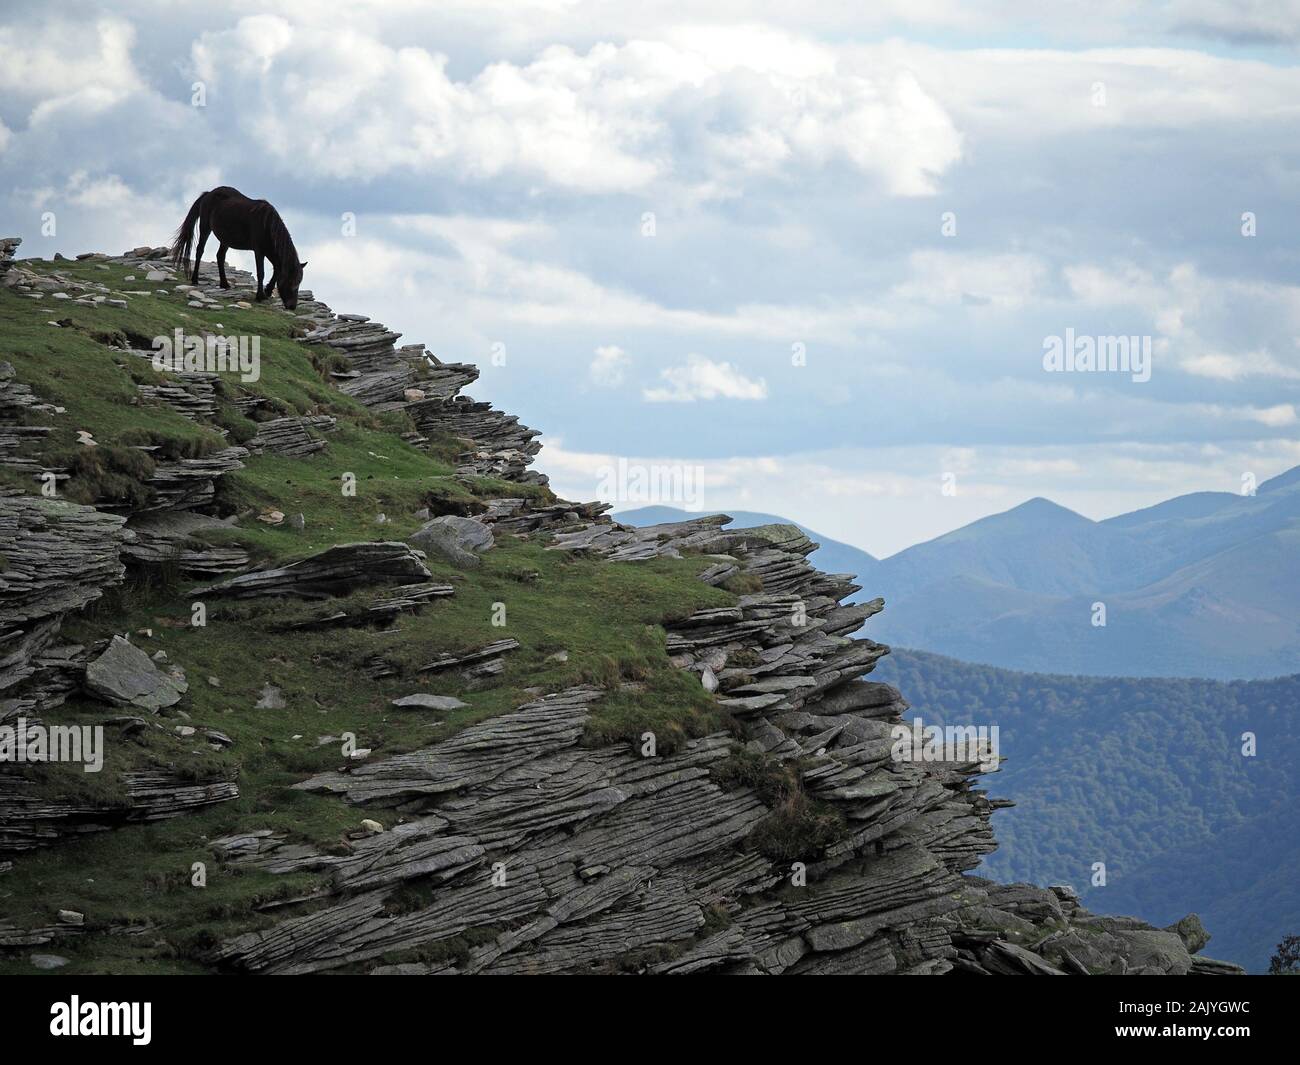 hardy black Pottok pony feeding on sparse grazing among slate rocks at the summit of La Rhune mountain, Pyrenees, France Stock Photo